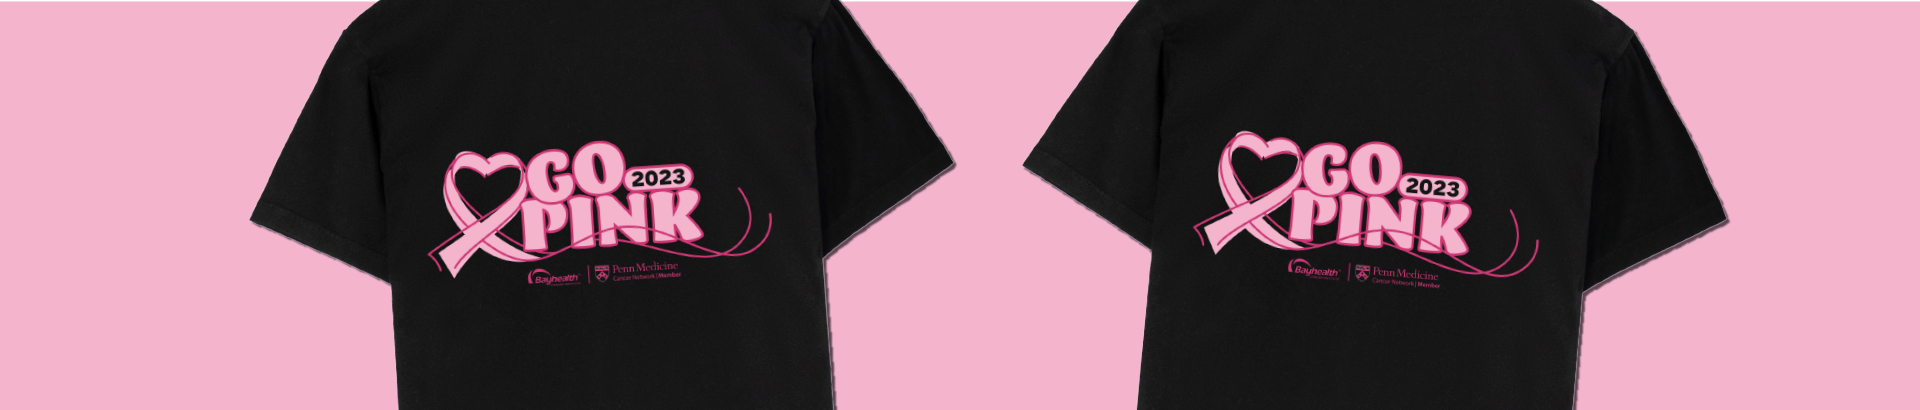 Go Pink Shirt Order 2023